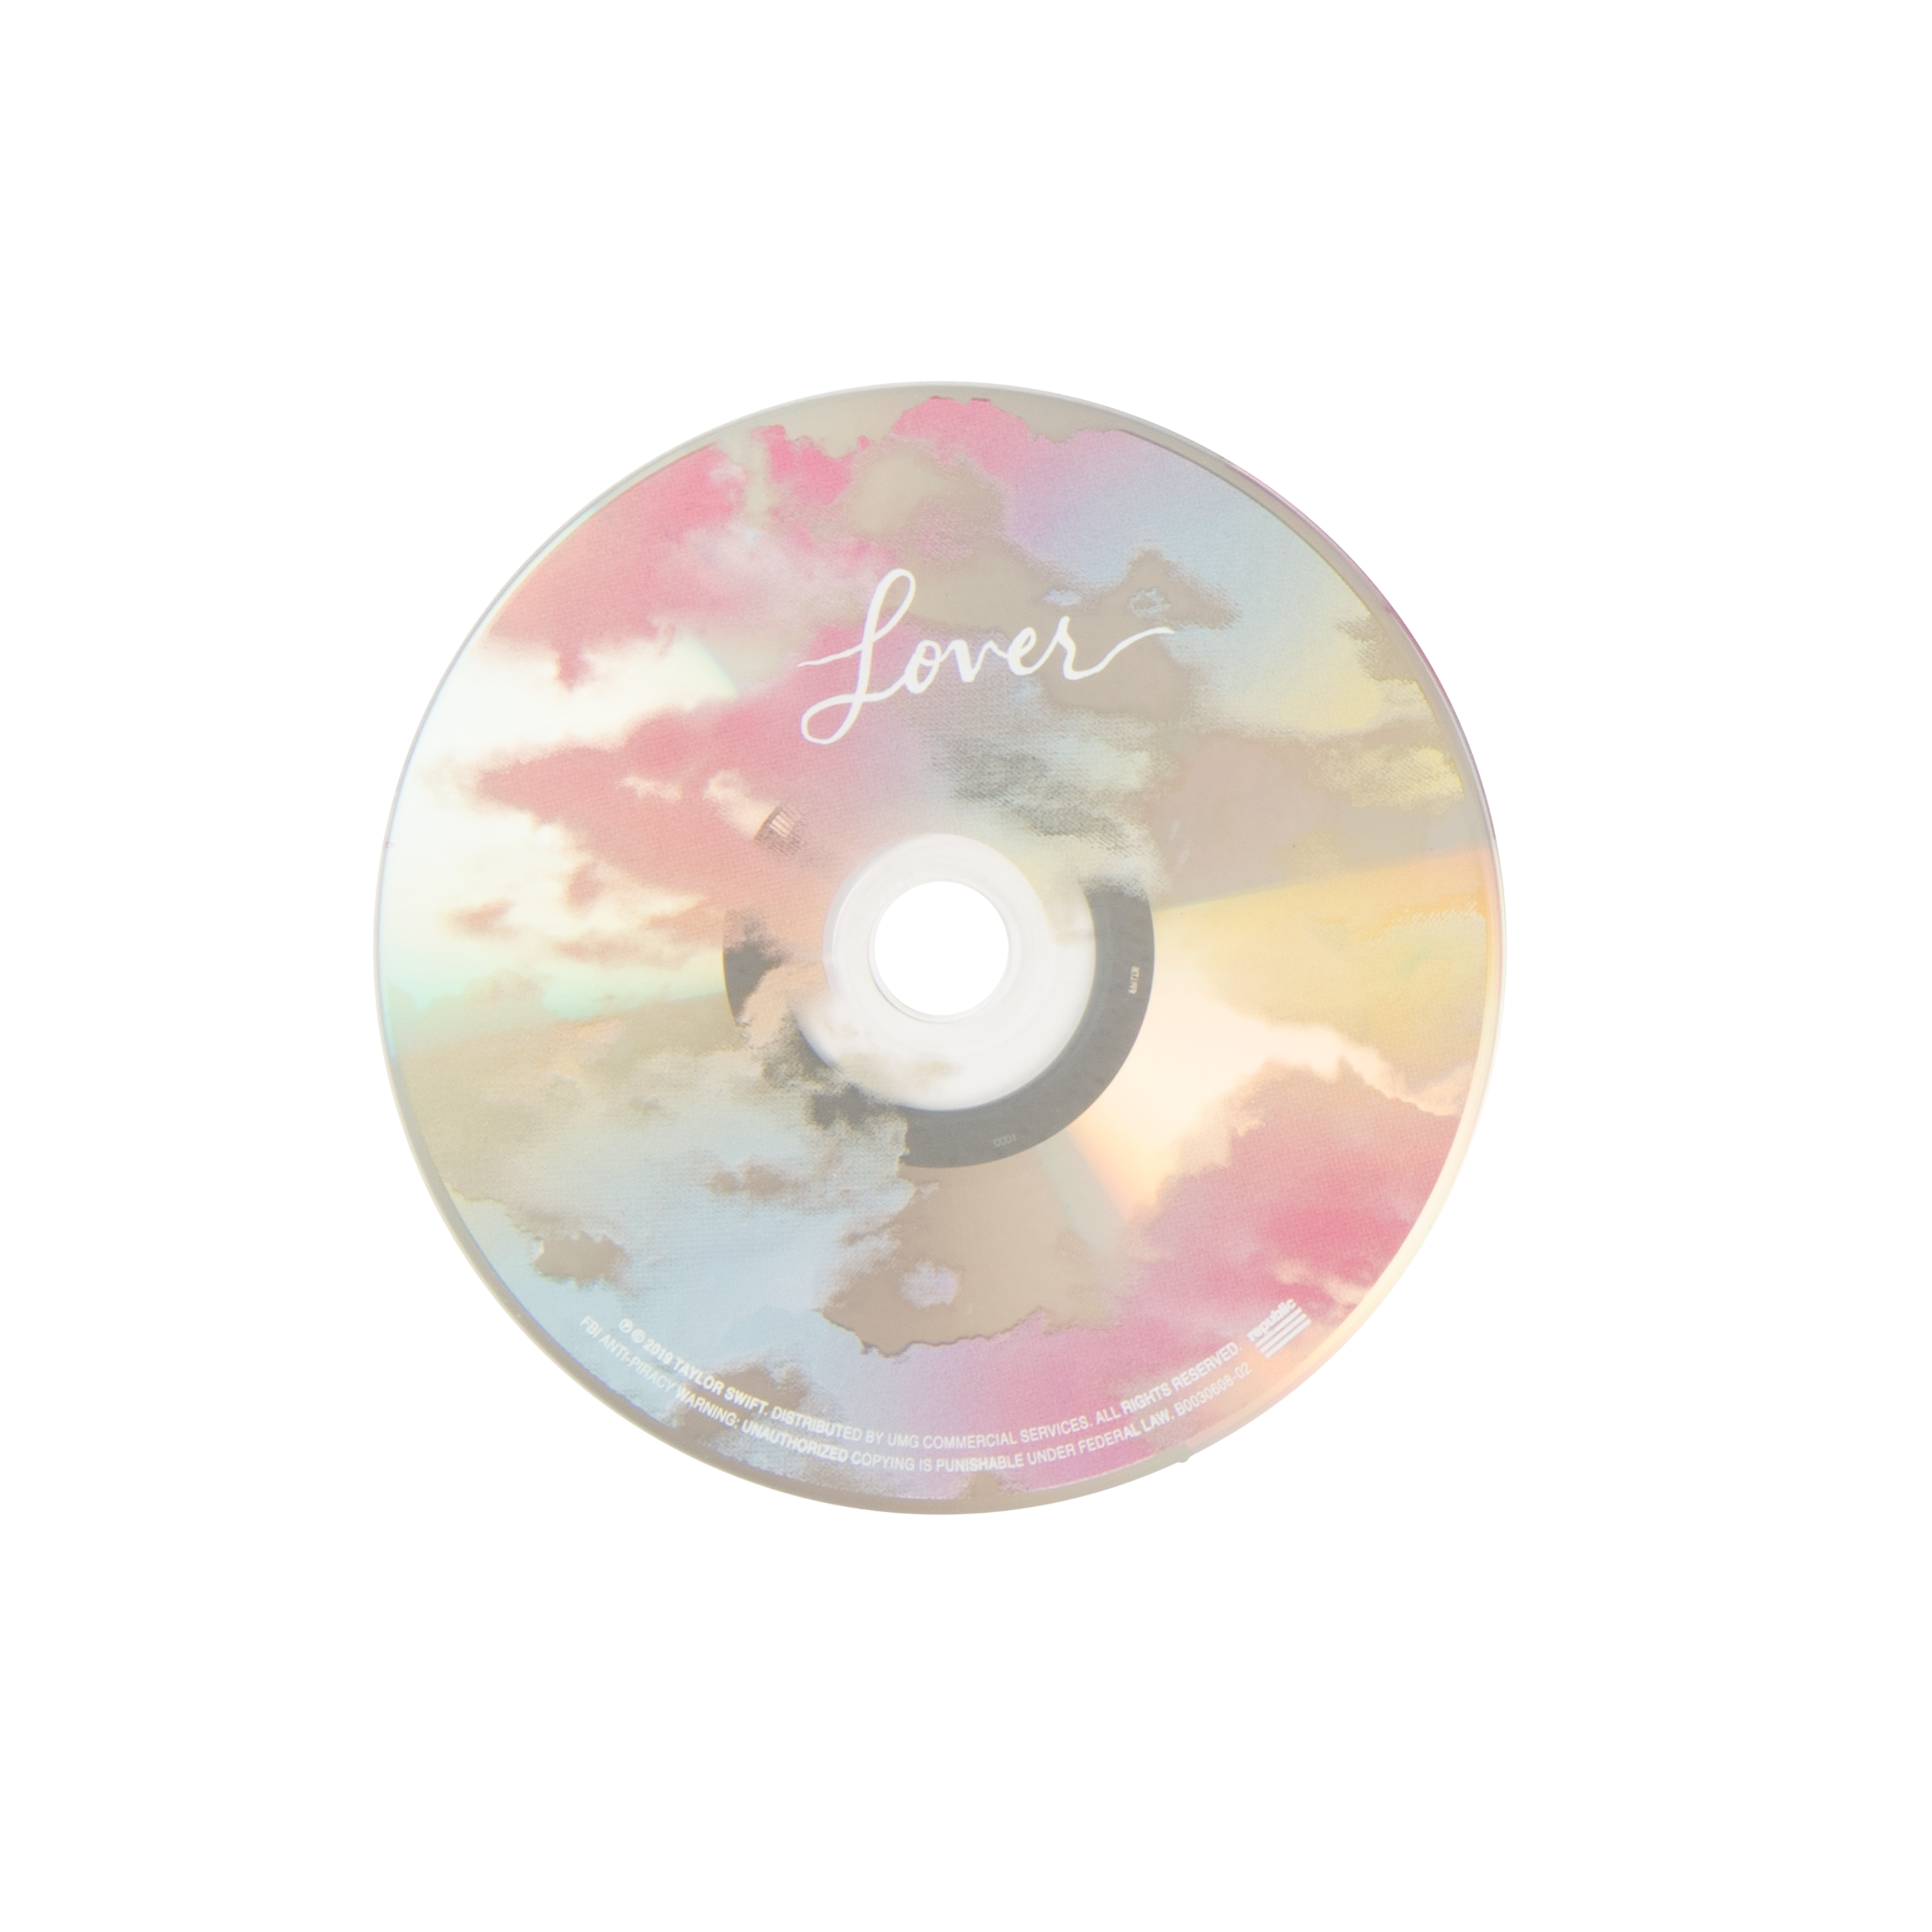 Lover CD Deluxe Version 3 CD